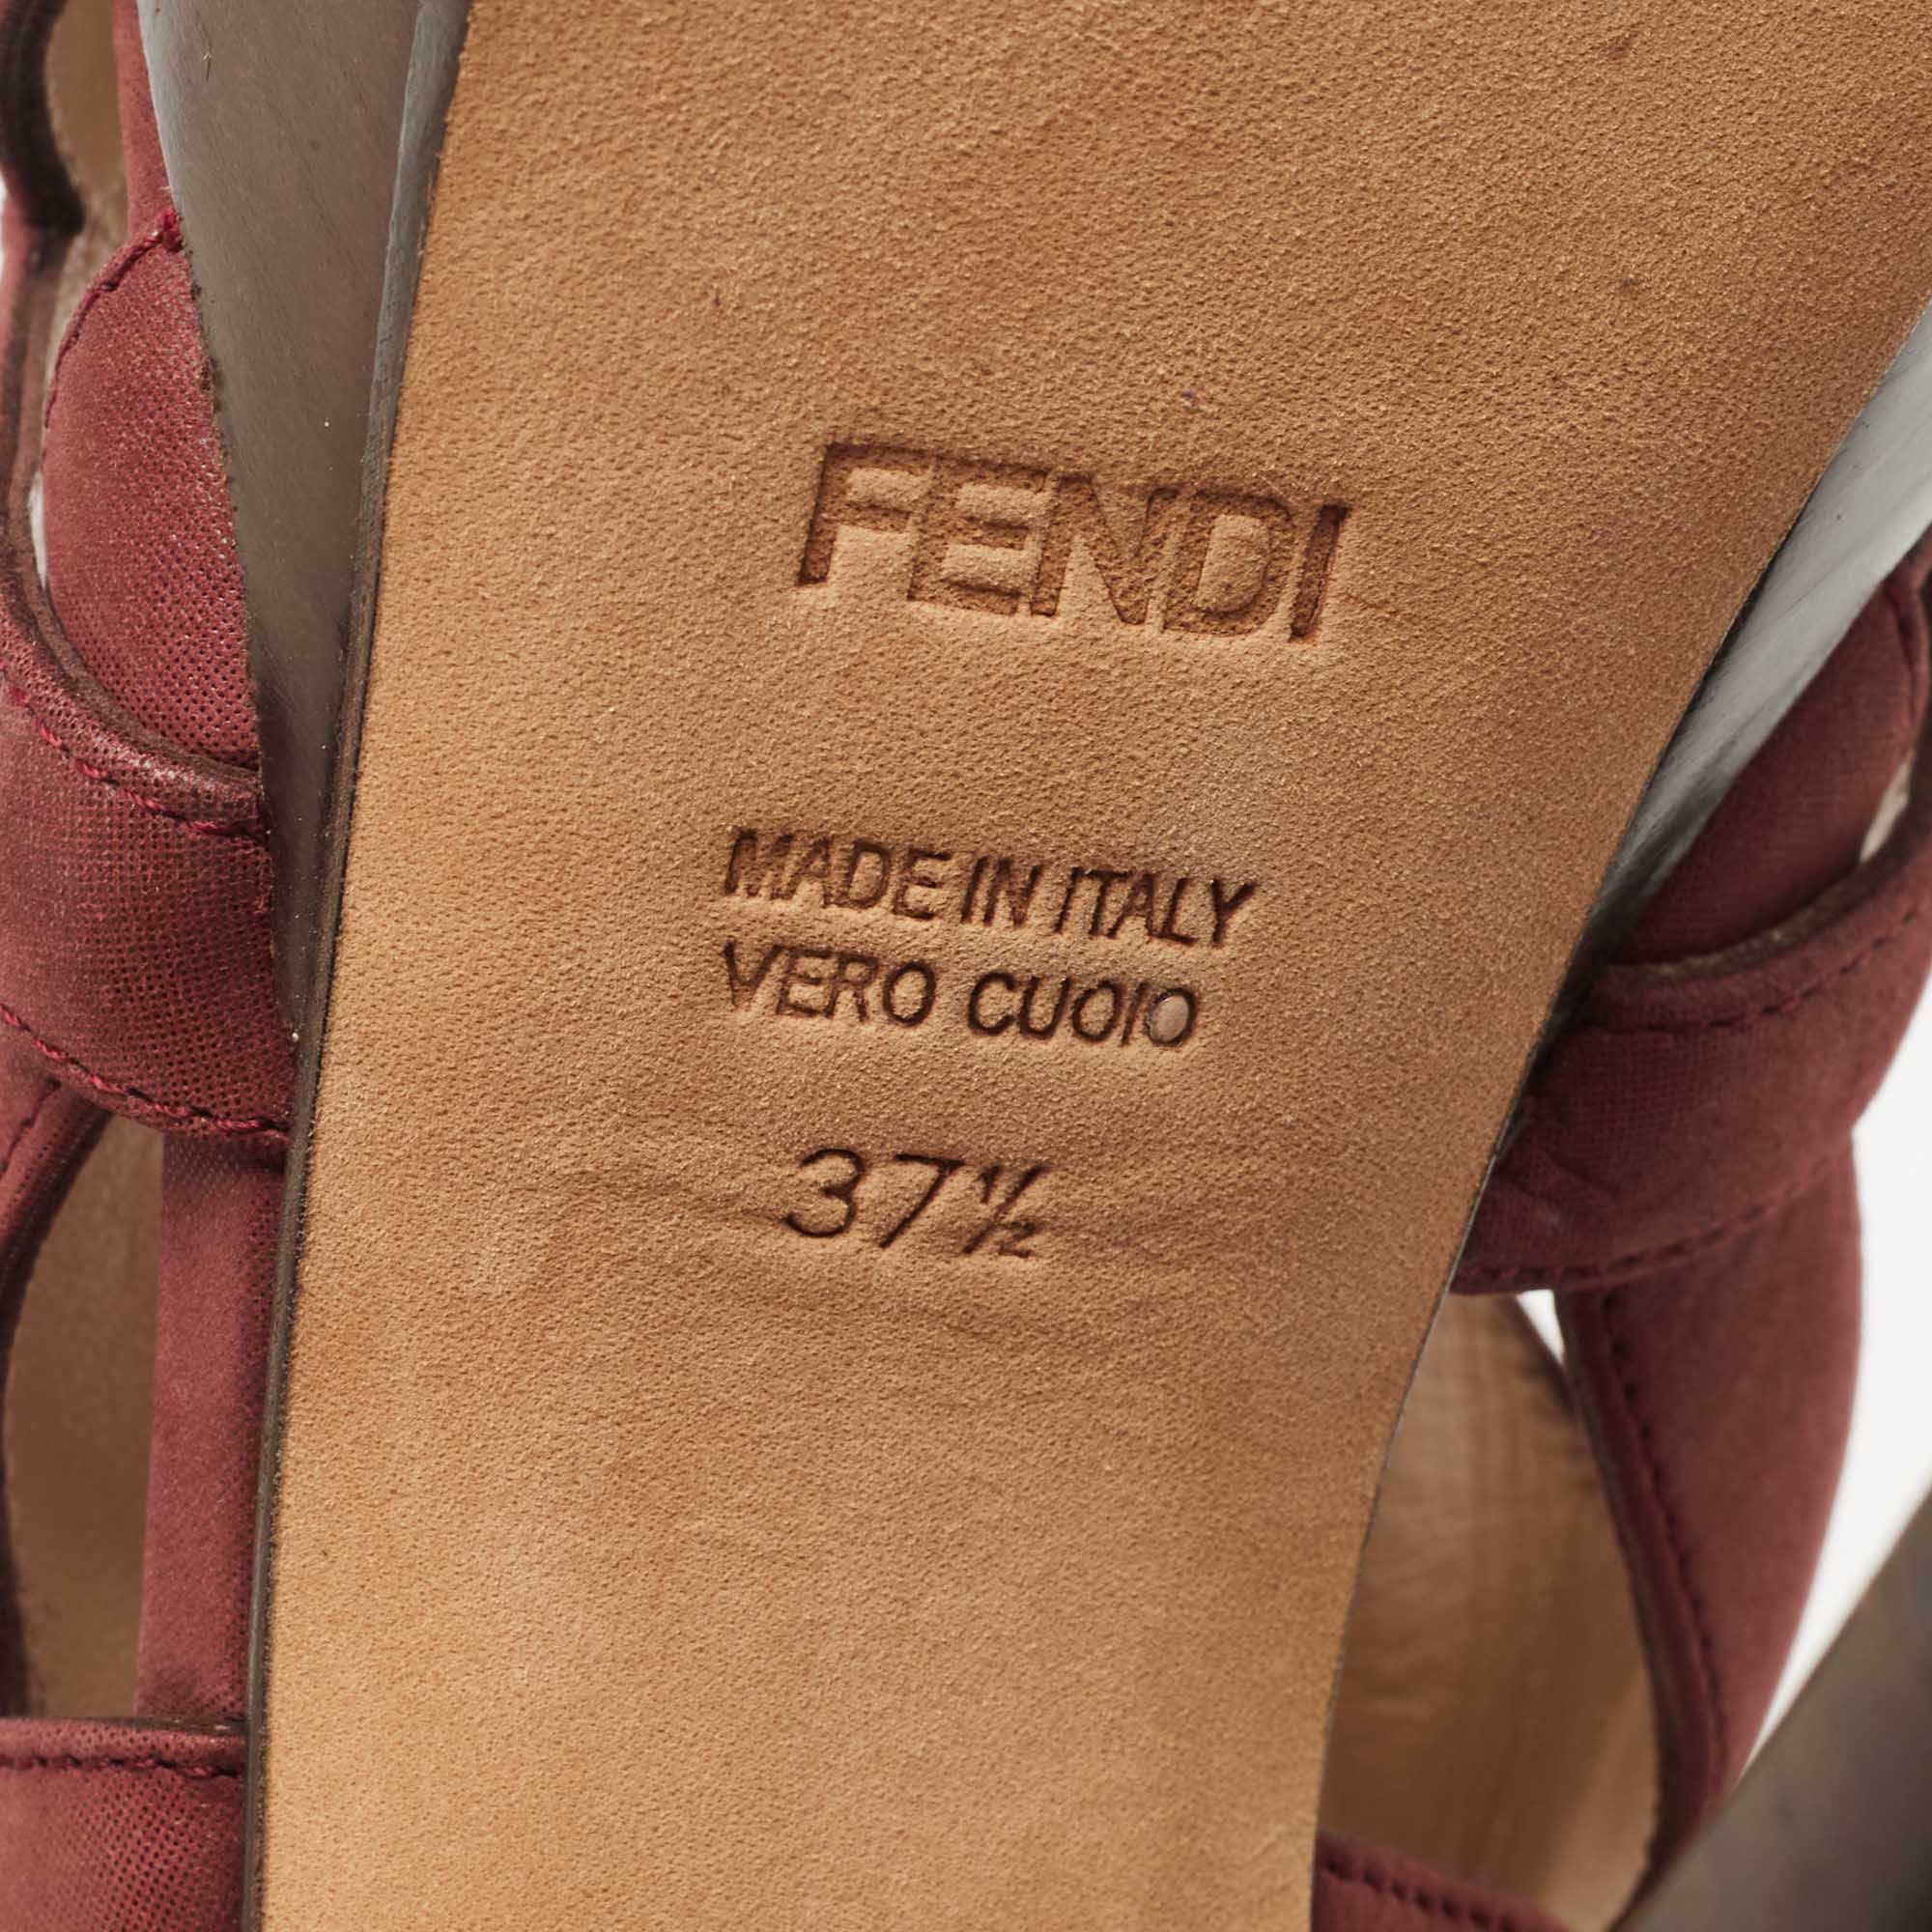 FendI Burgundy Glitter Nubuck Leather Peep Toe Platform Pumps Size 37.5